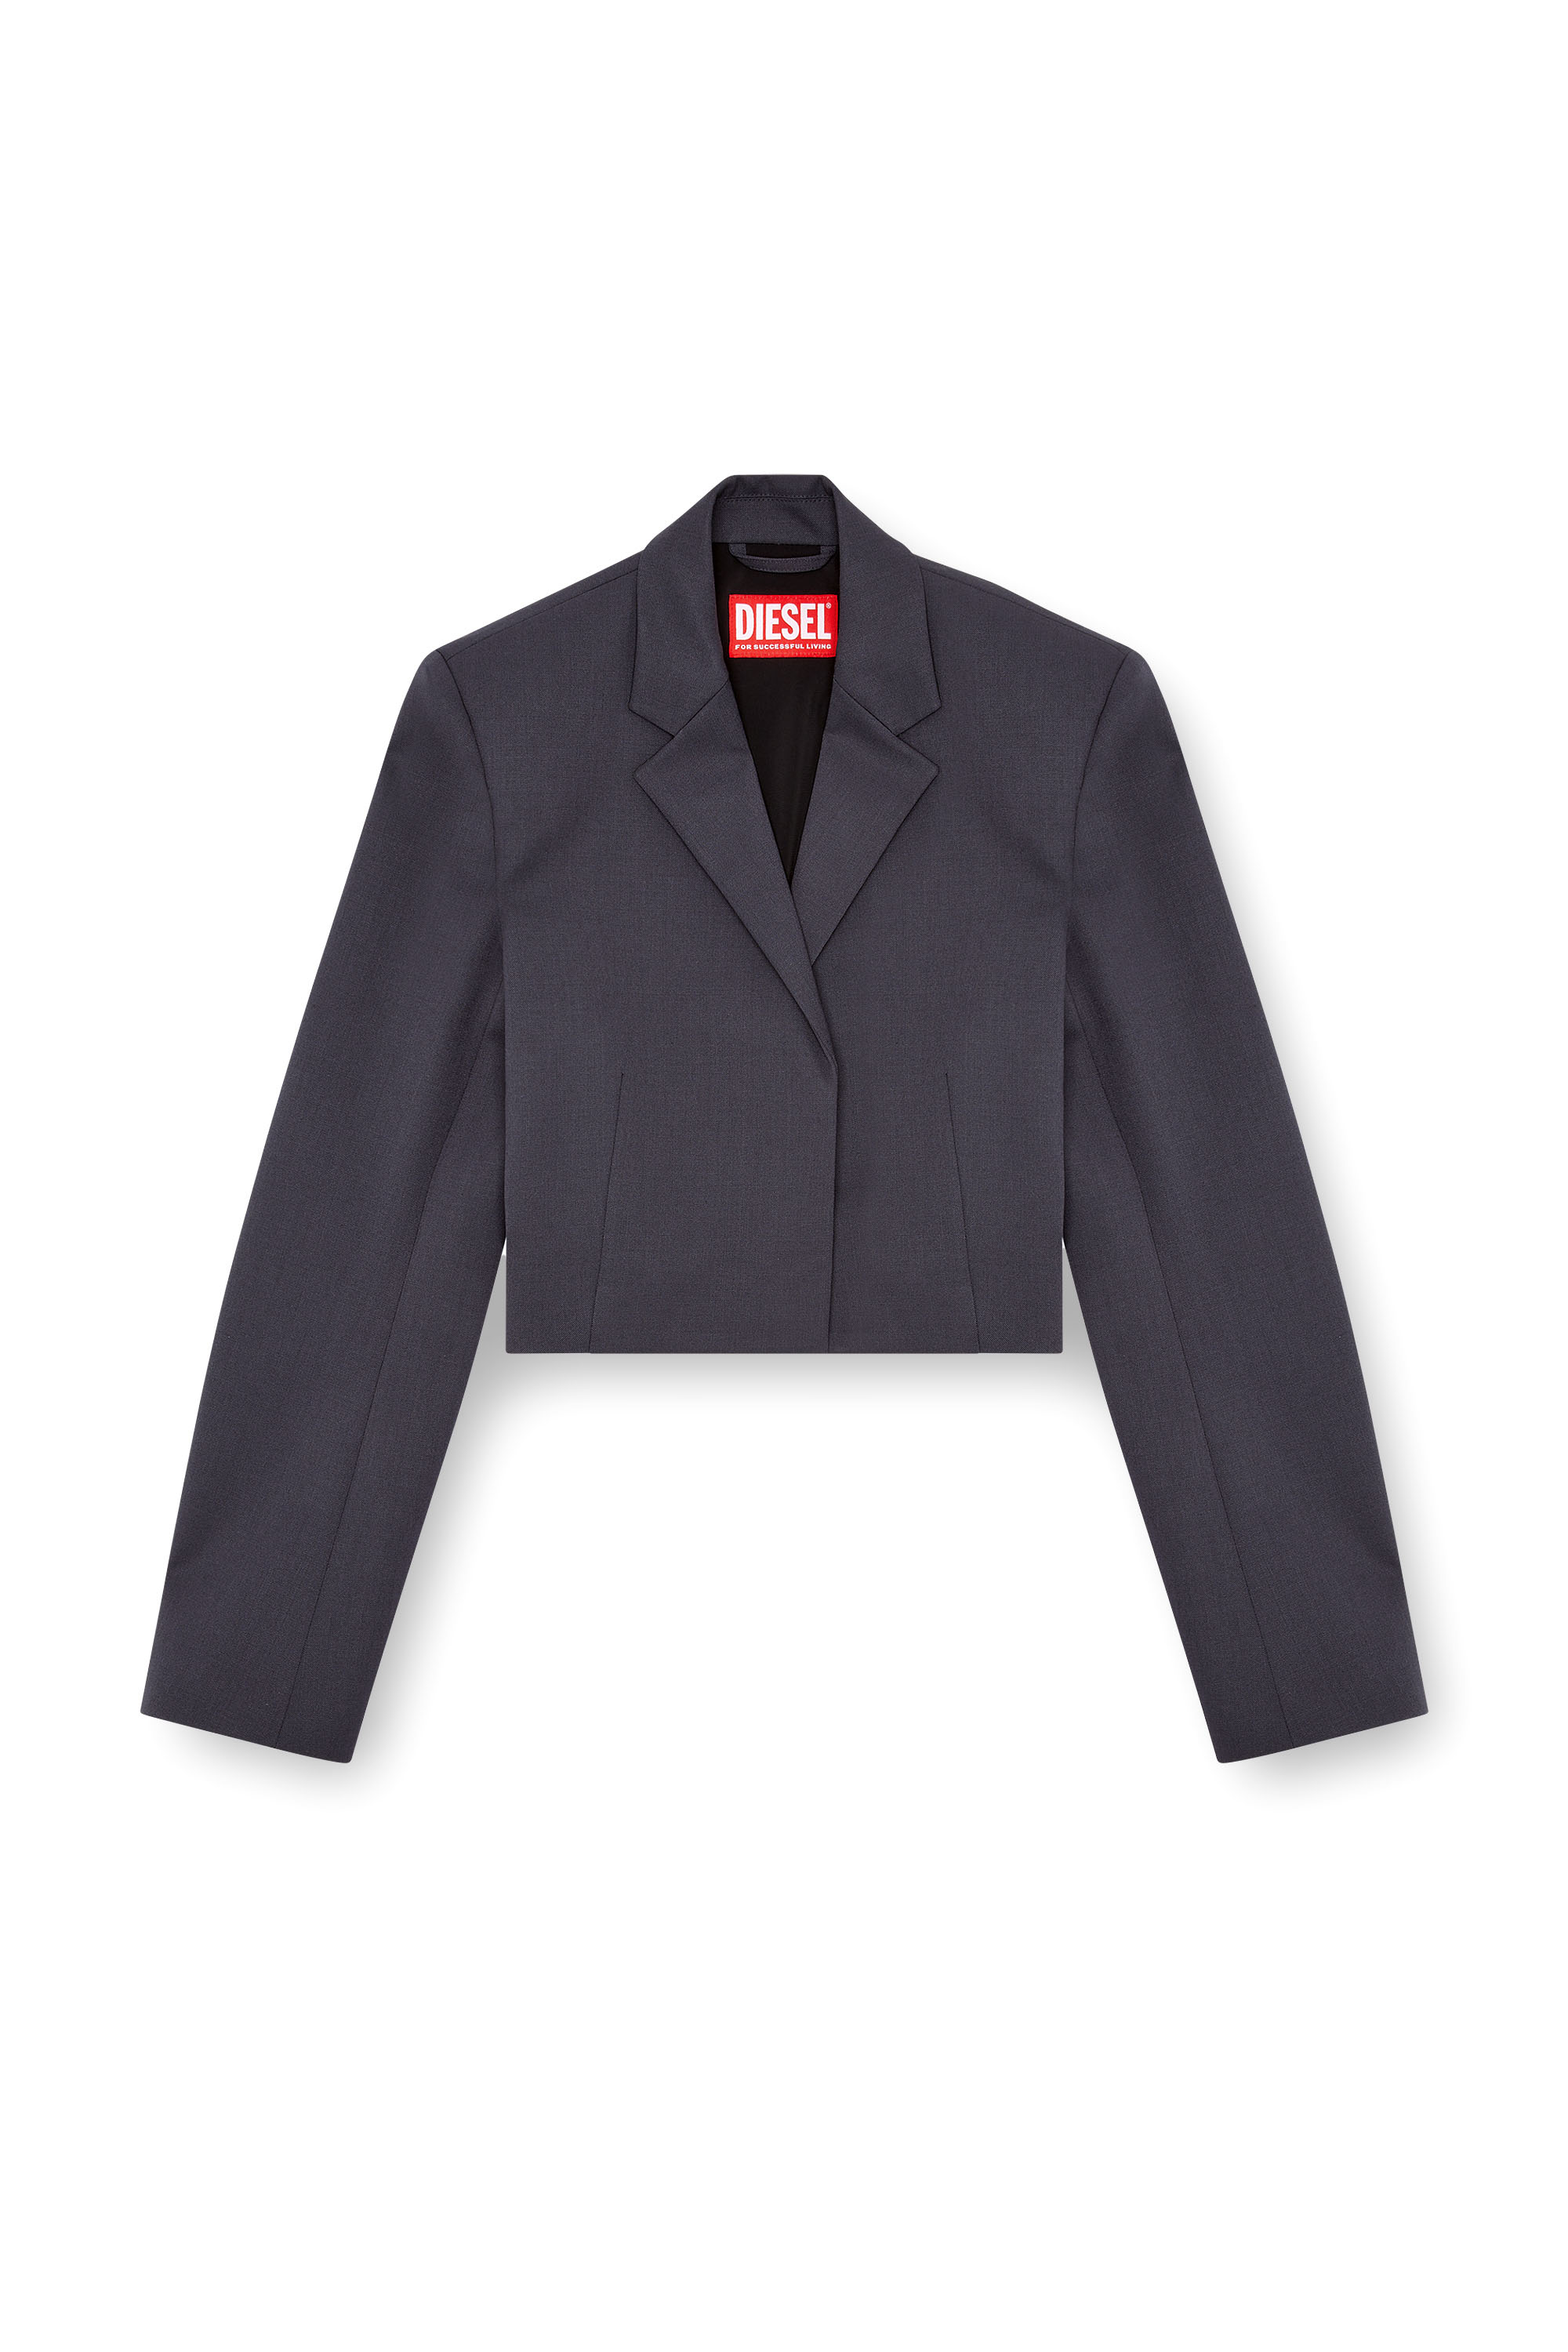 Diesel - G-MILLA-P1, Female Cropped blazer in stretch wool blend in グレー - Image 3